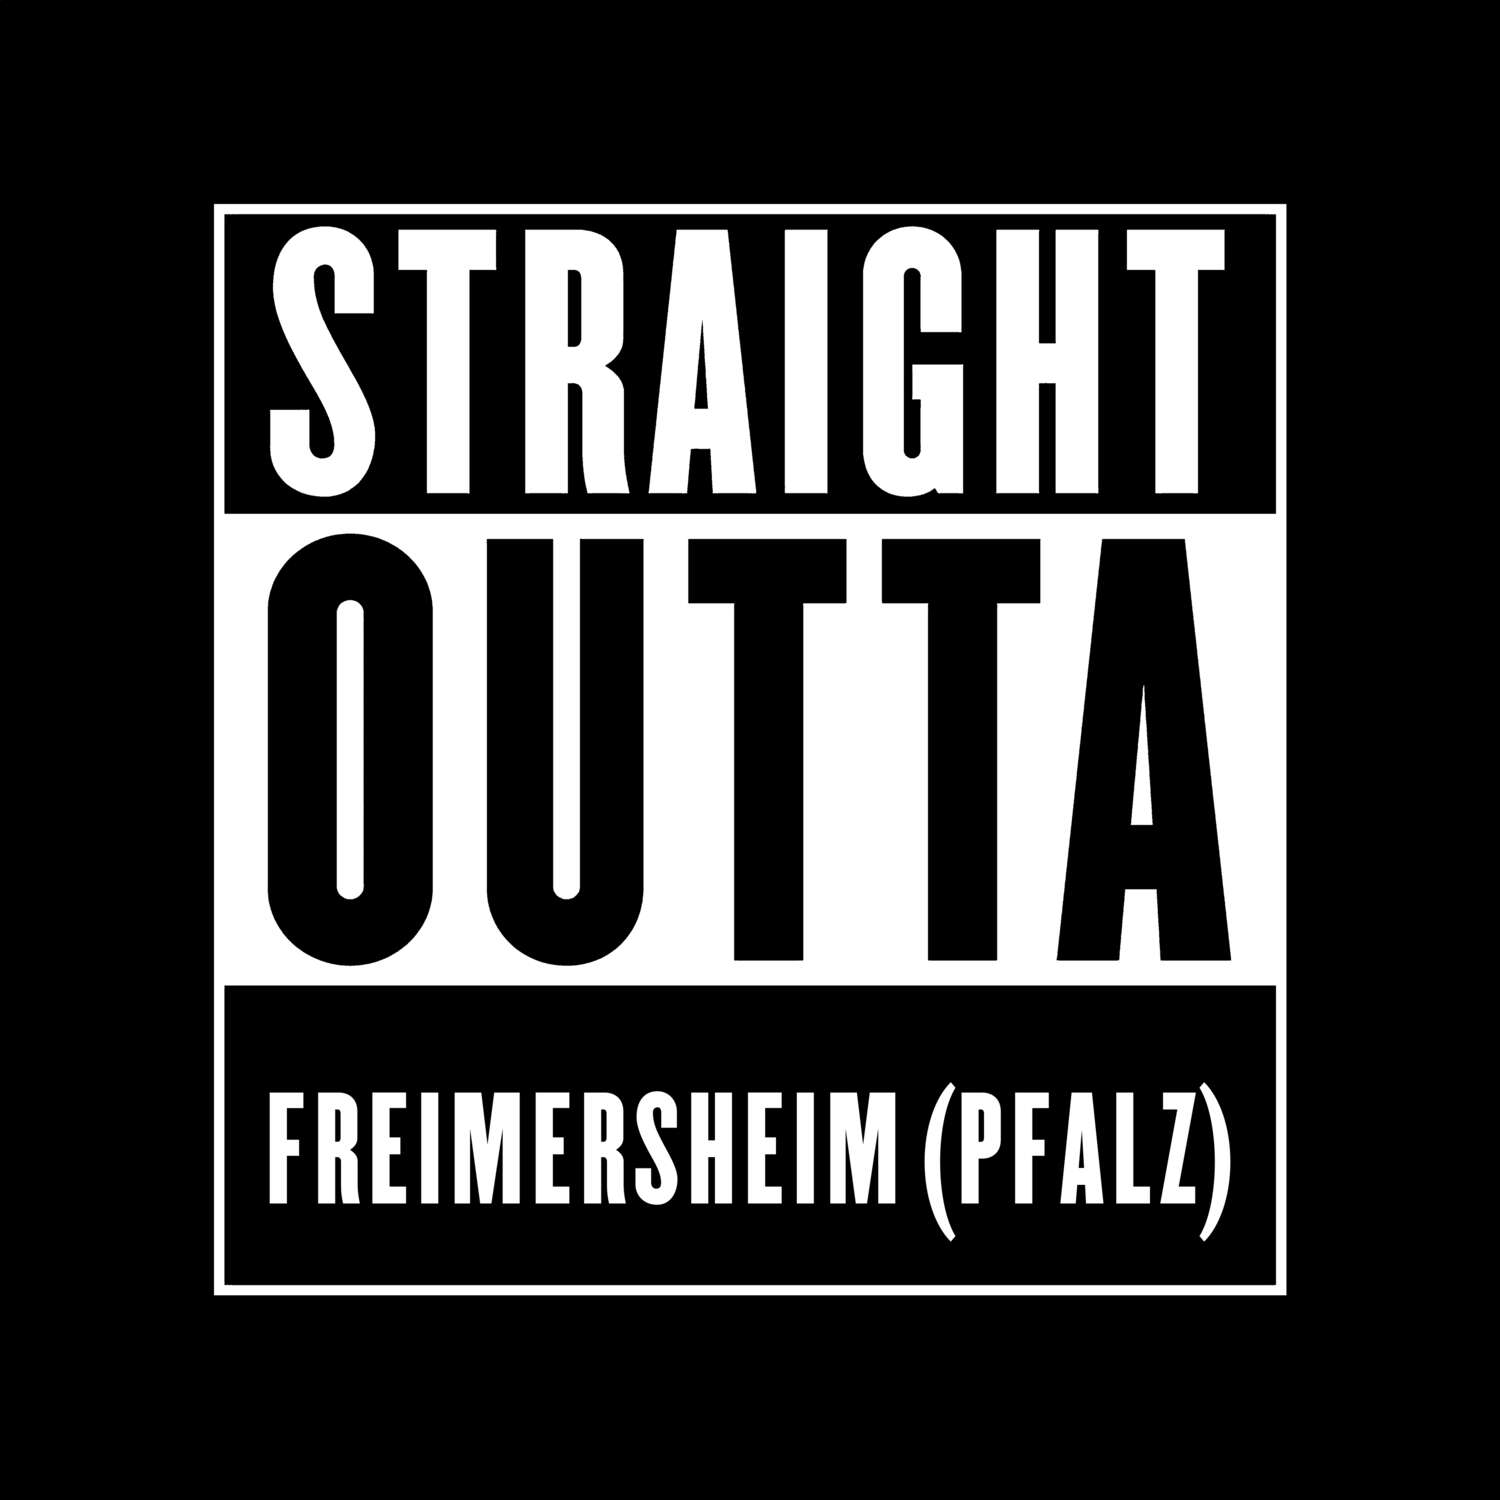 Freimersheim (Pfalz) T-Shirt »Straight Outta«